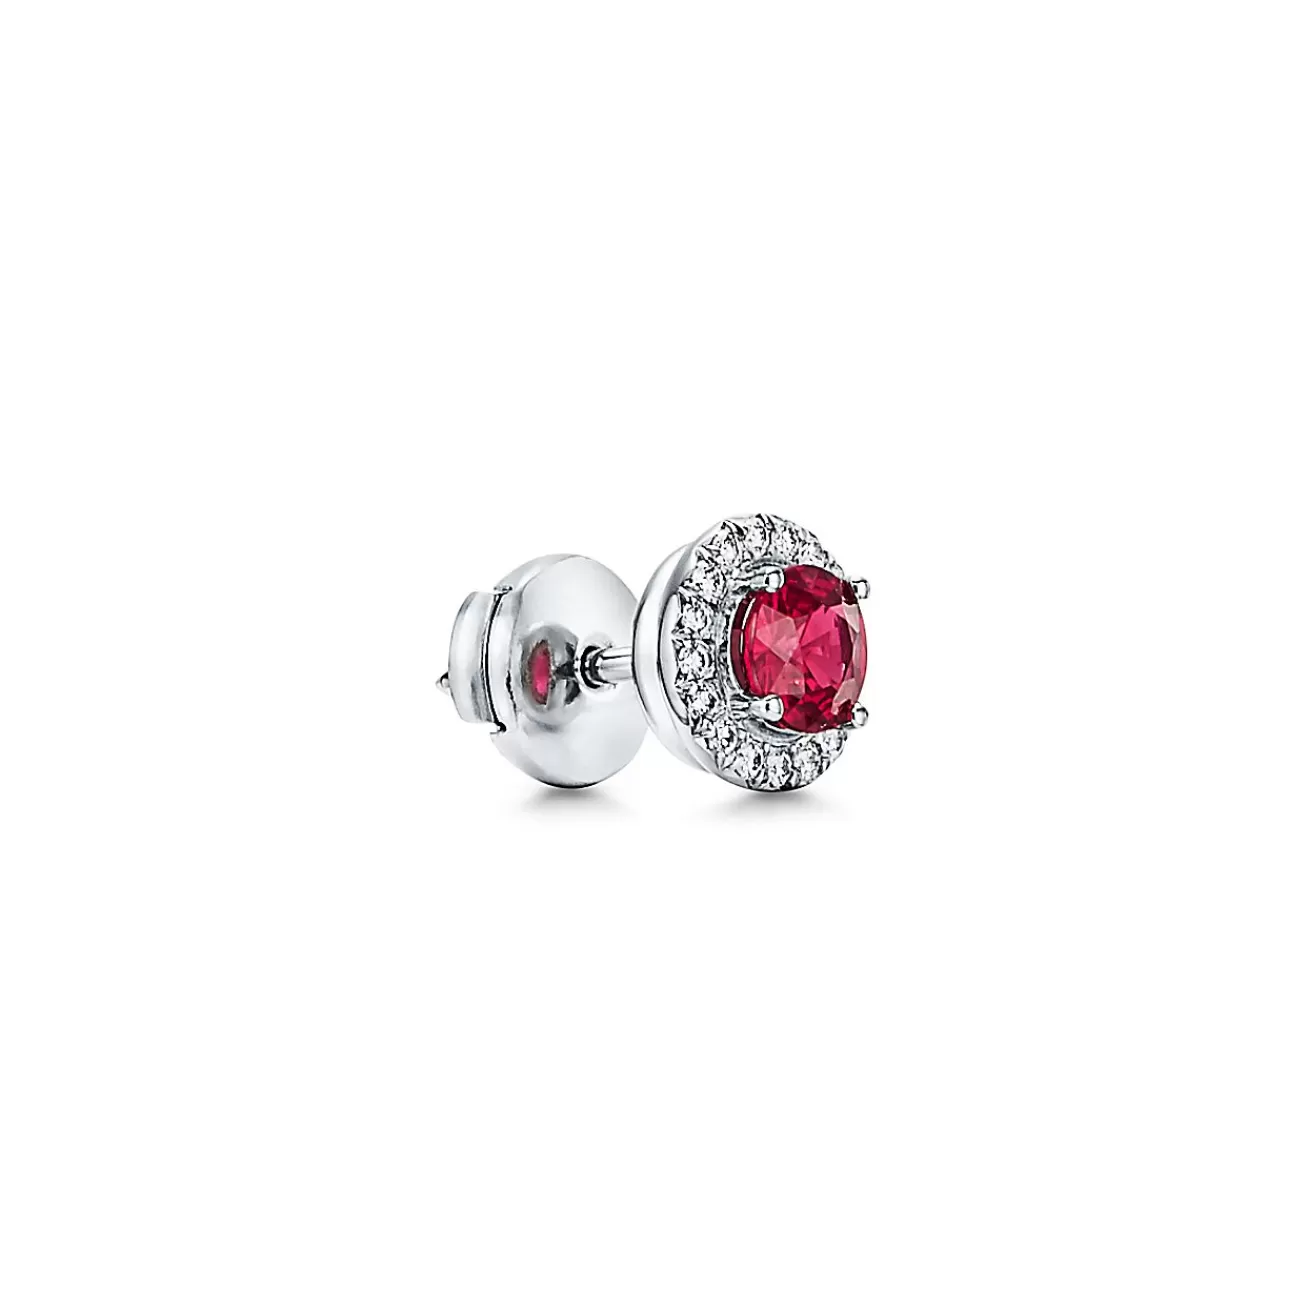 Tiffany & Co. Tiffany Soleste® earrings with rubies and diamonds. | ^ Earrings | Colored Gemstone Jewelry